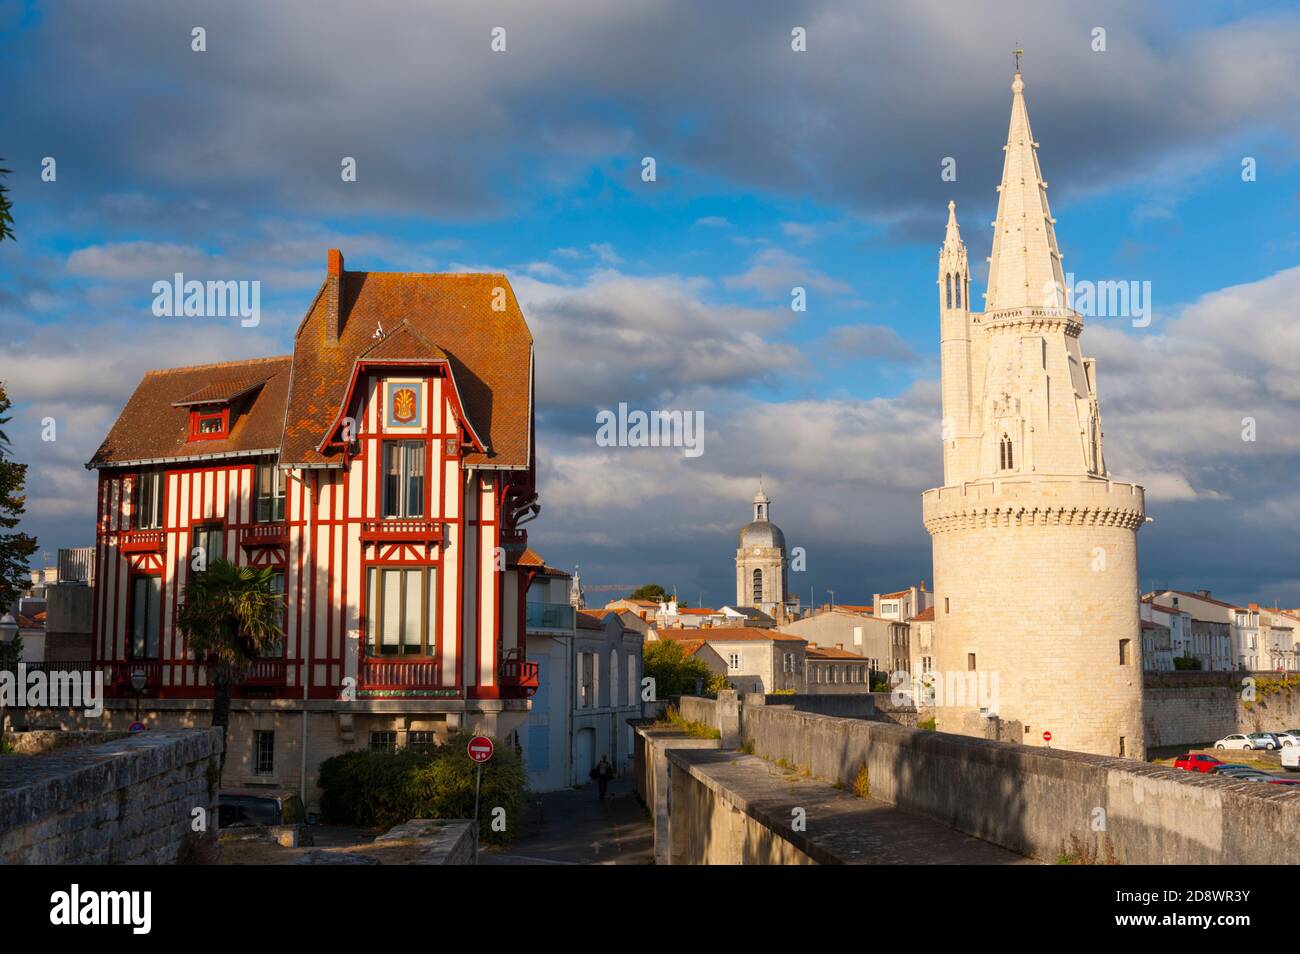 France, Charente-Maritime (17), La Rochelle, Tour de la Lanterne tower, battlements and traditional half-timbered house Stock Photo